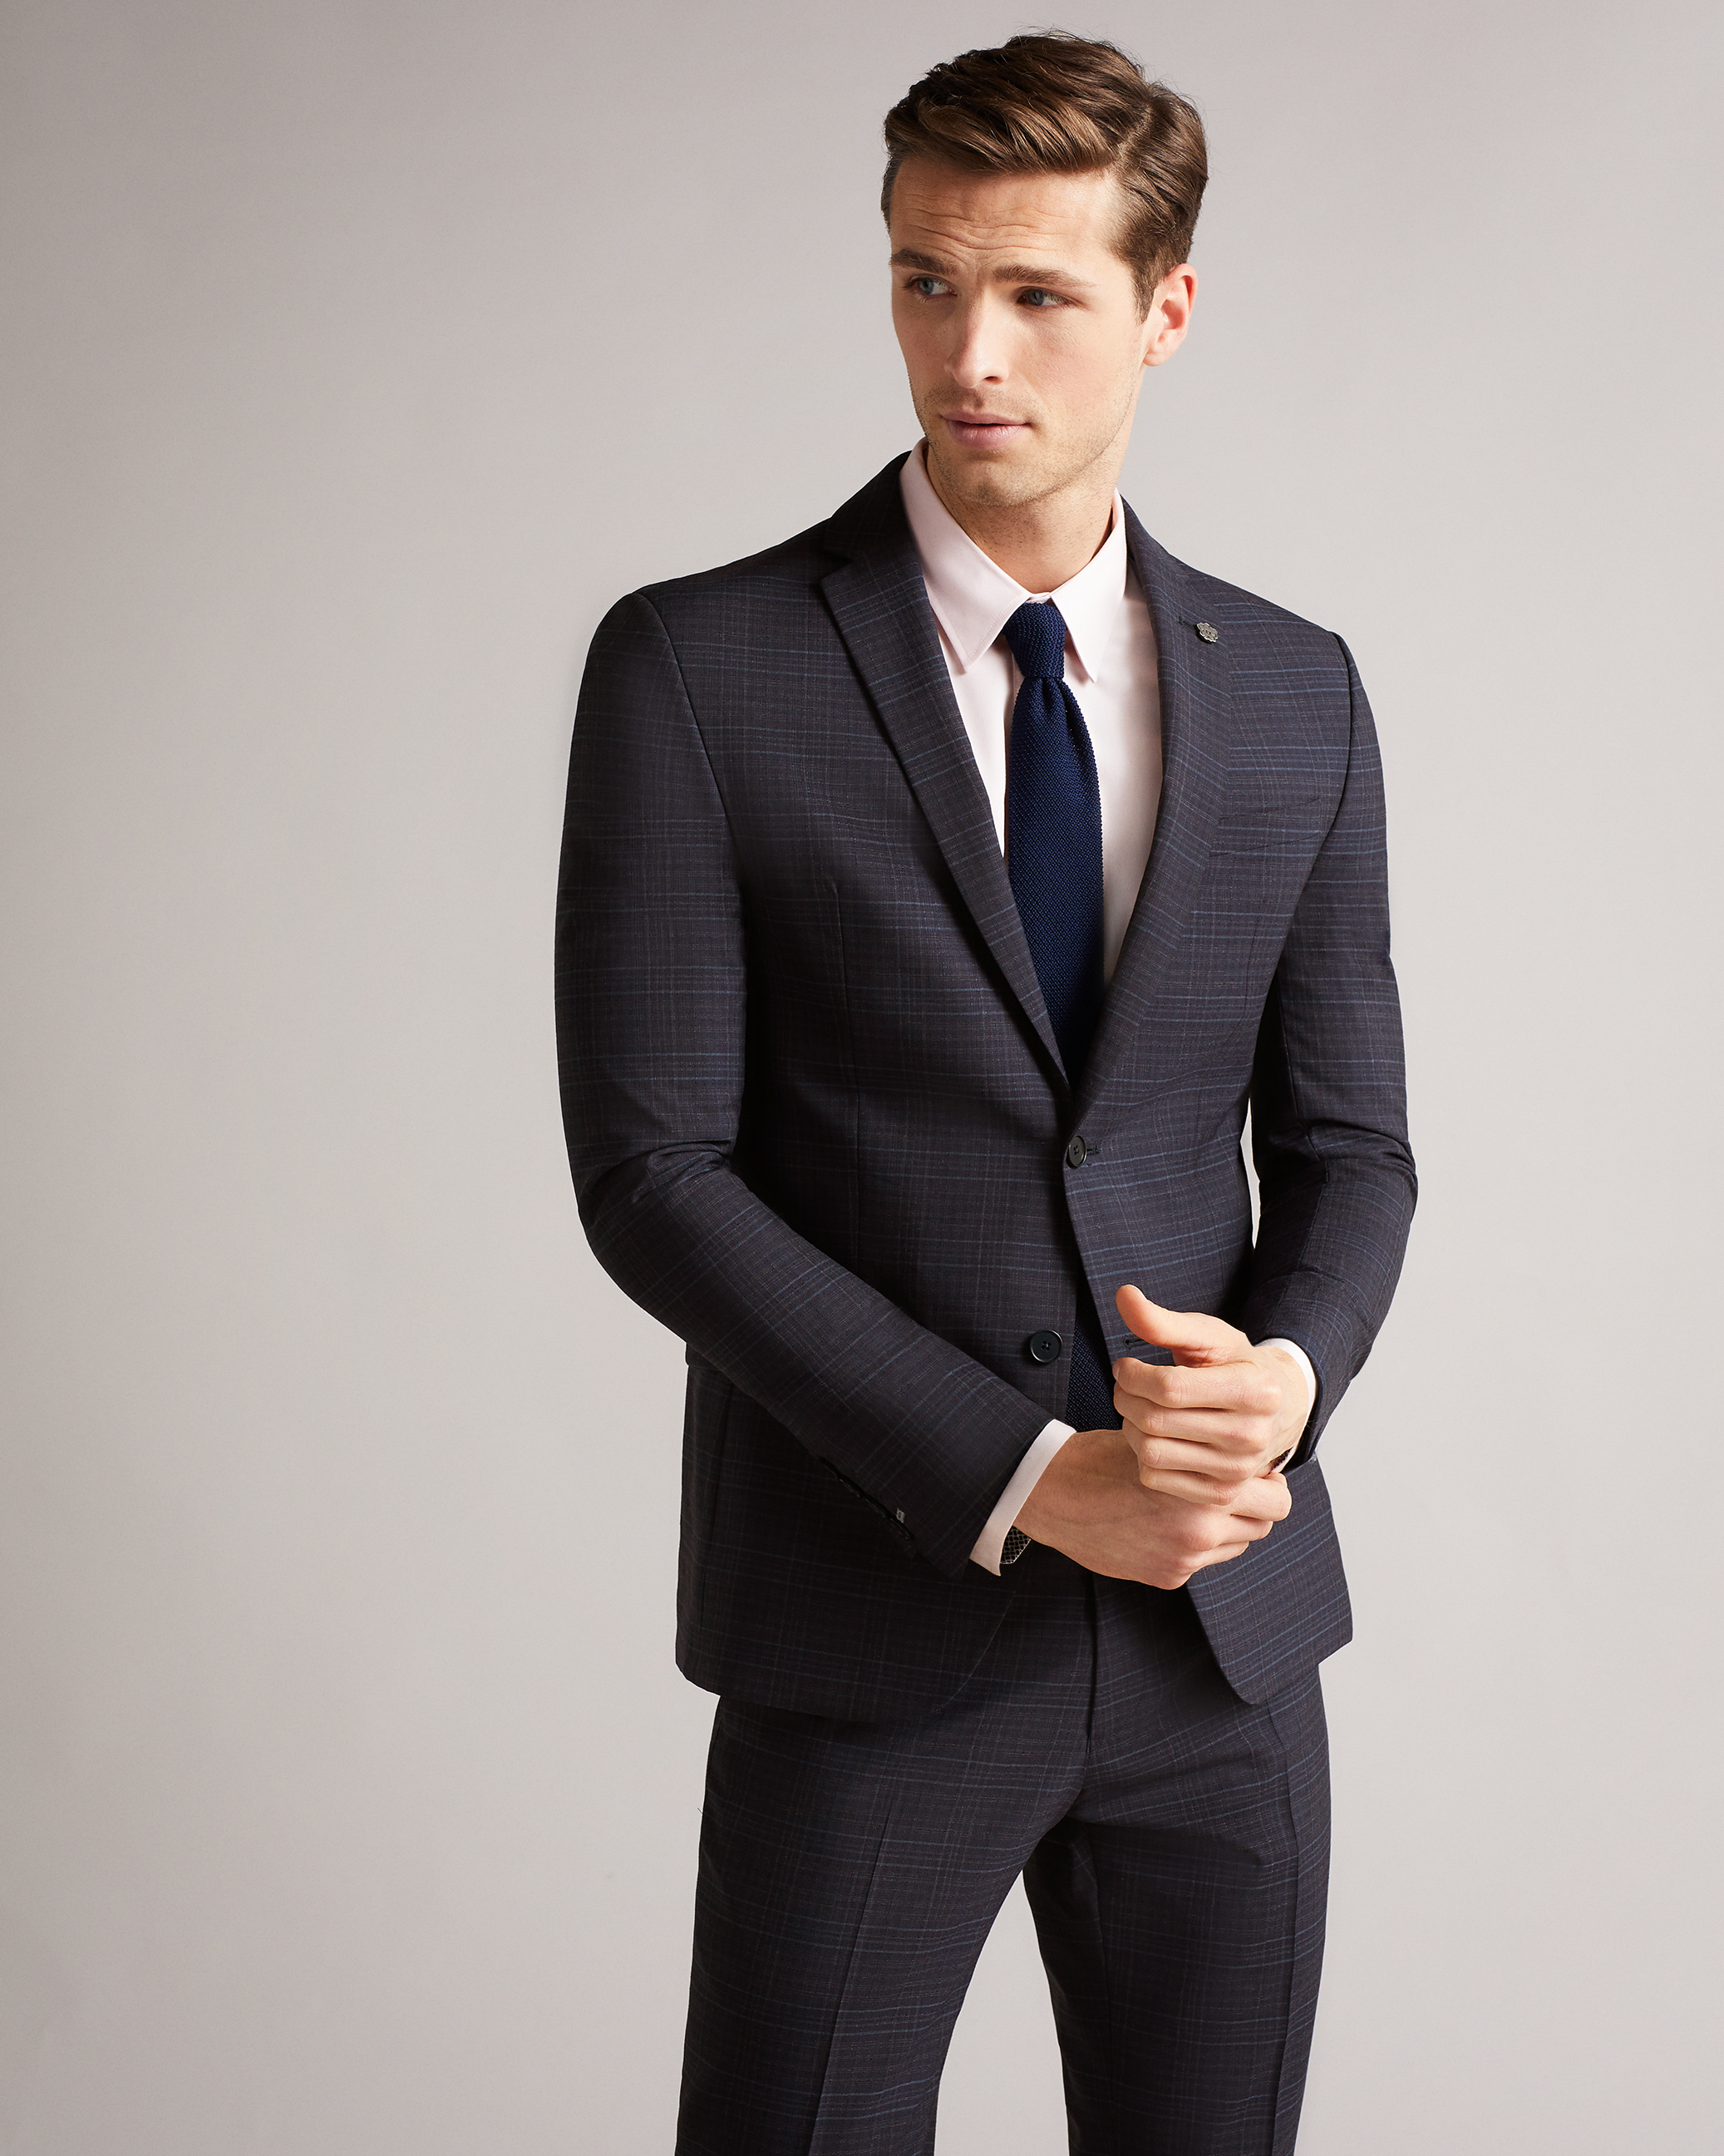 Suits | Men's Designer Suits | Ted Baker US